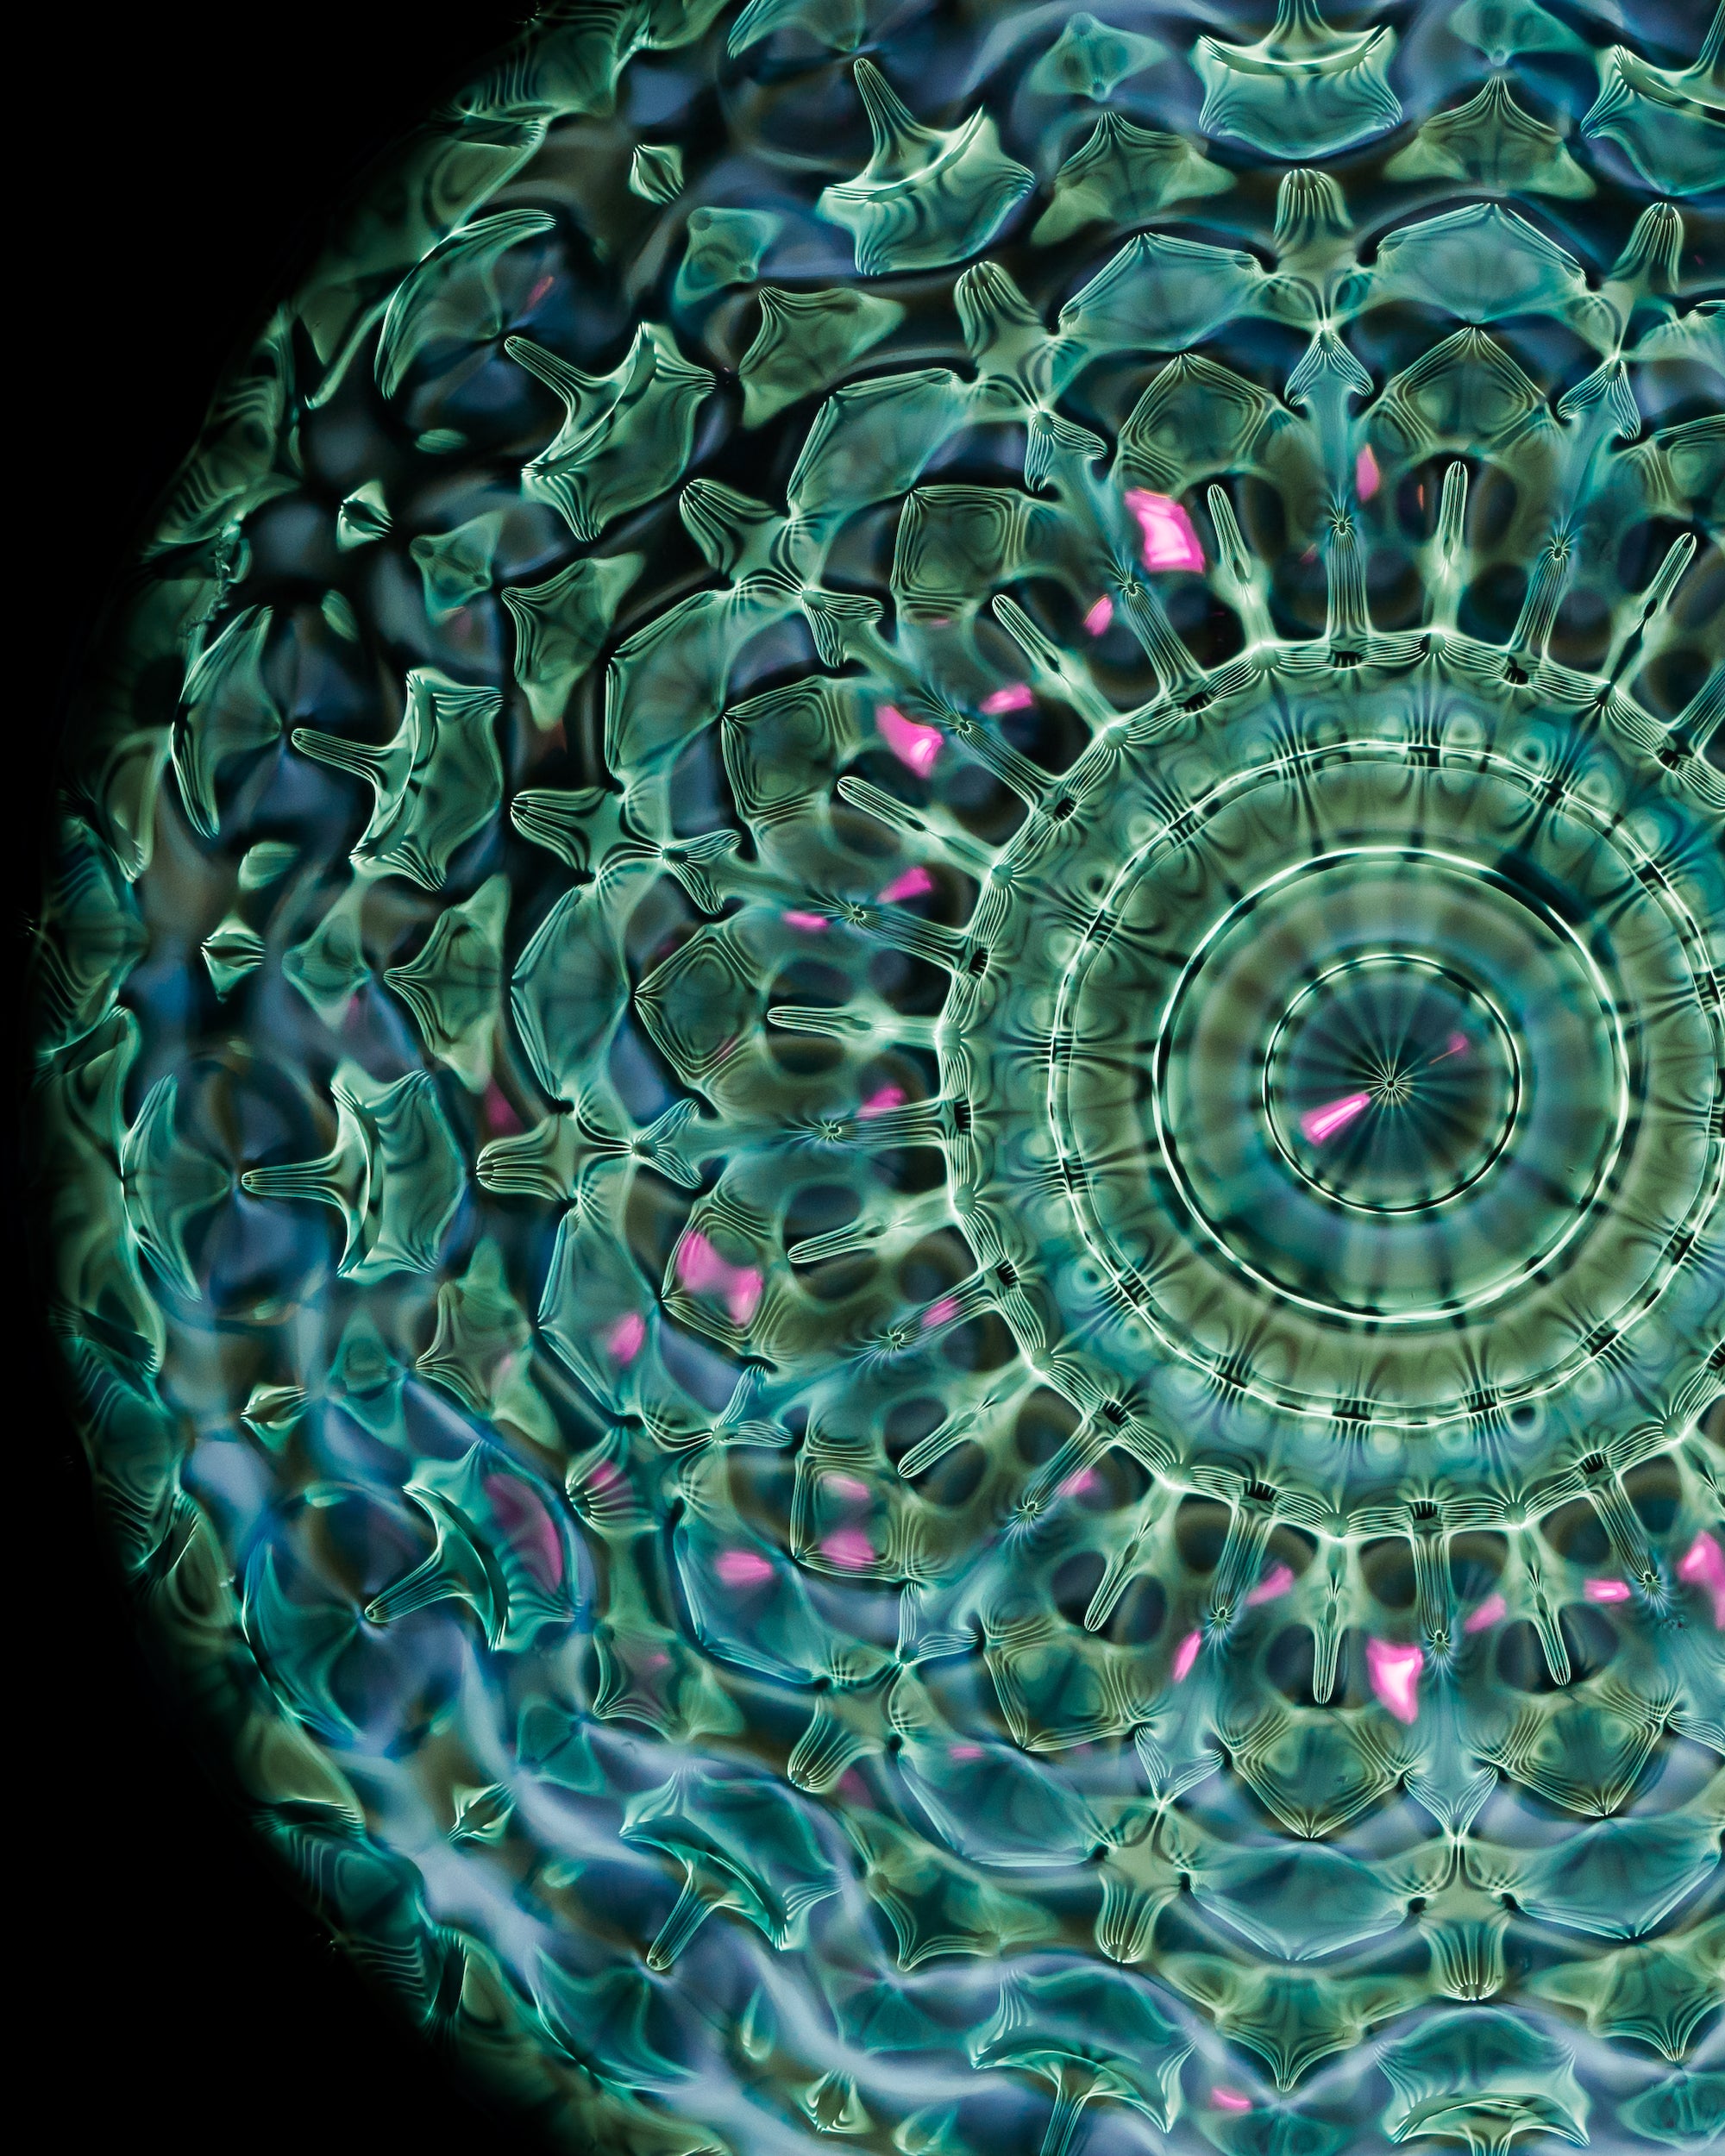 cymatics photo print 52Hz (Note G#) - Journey of Curiosity